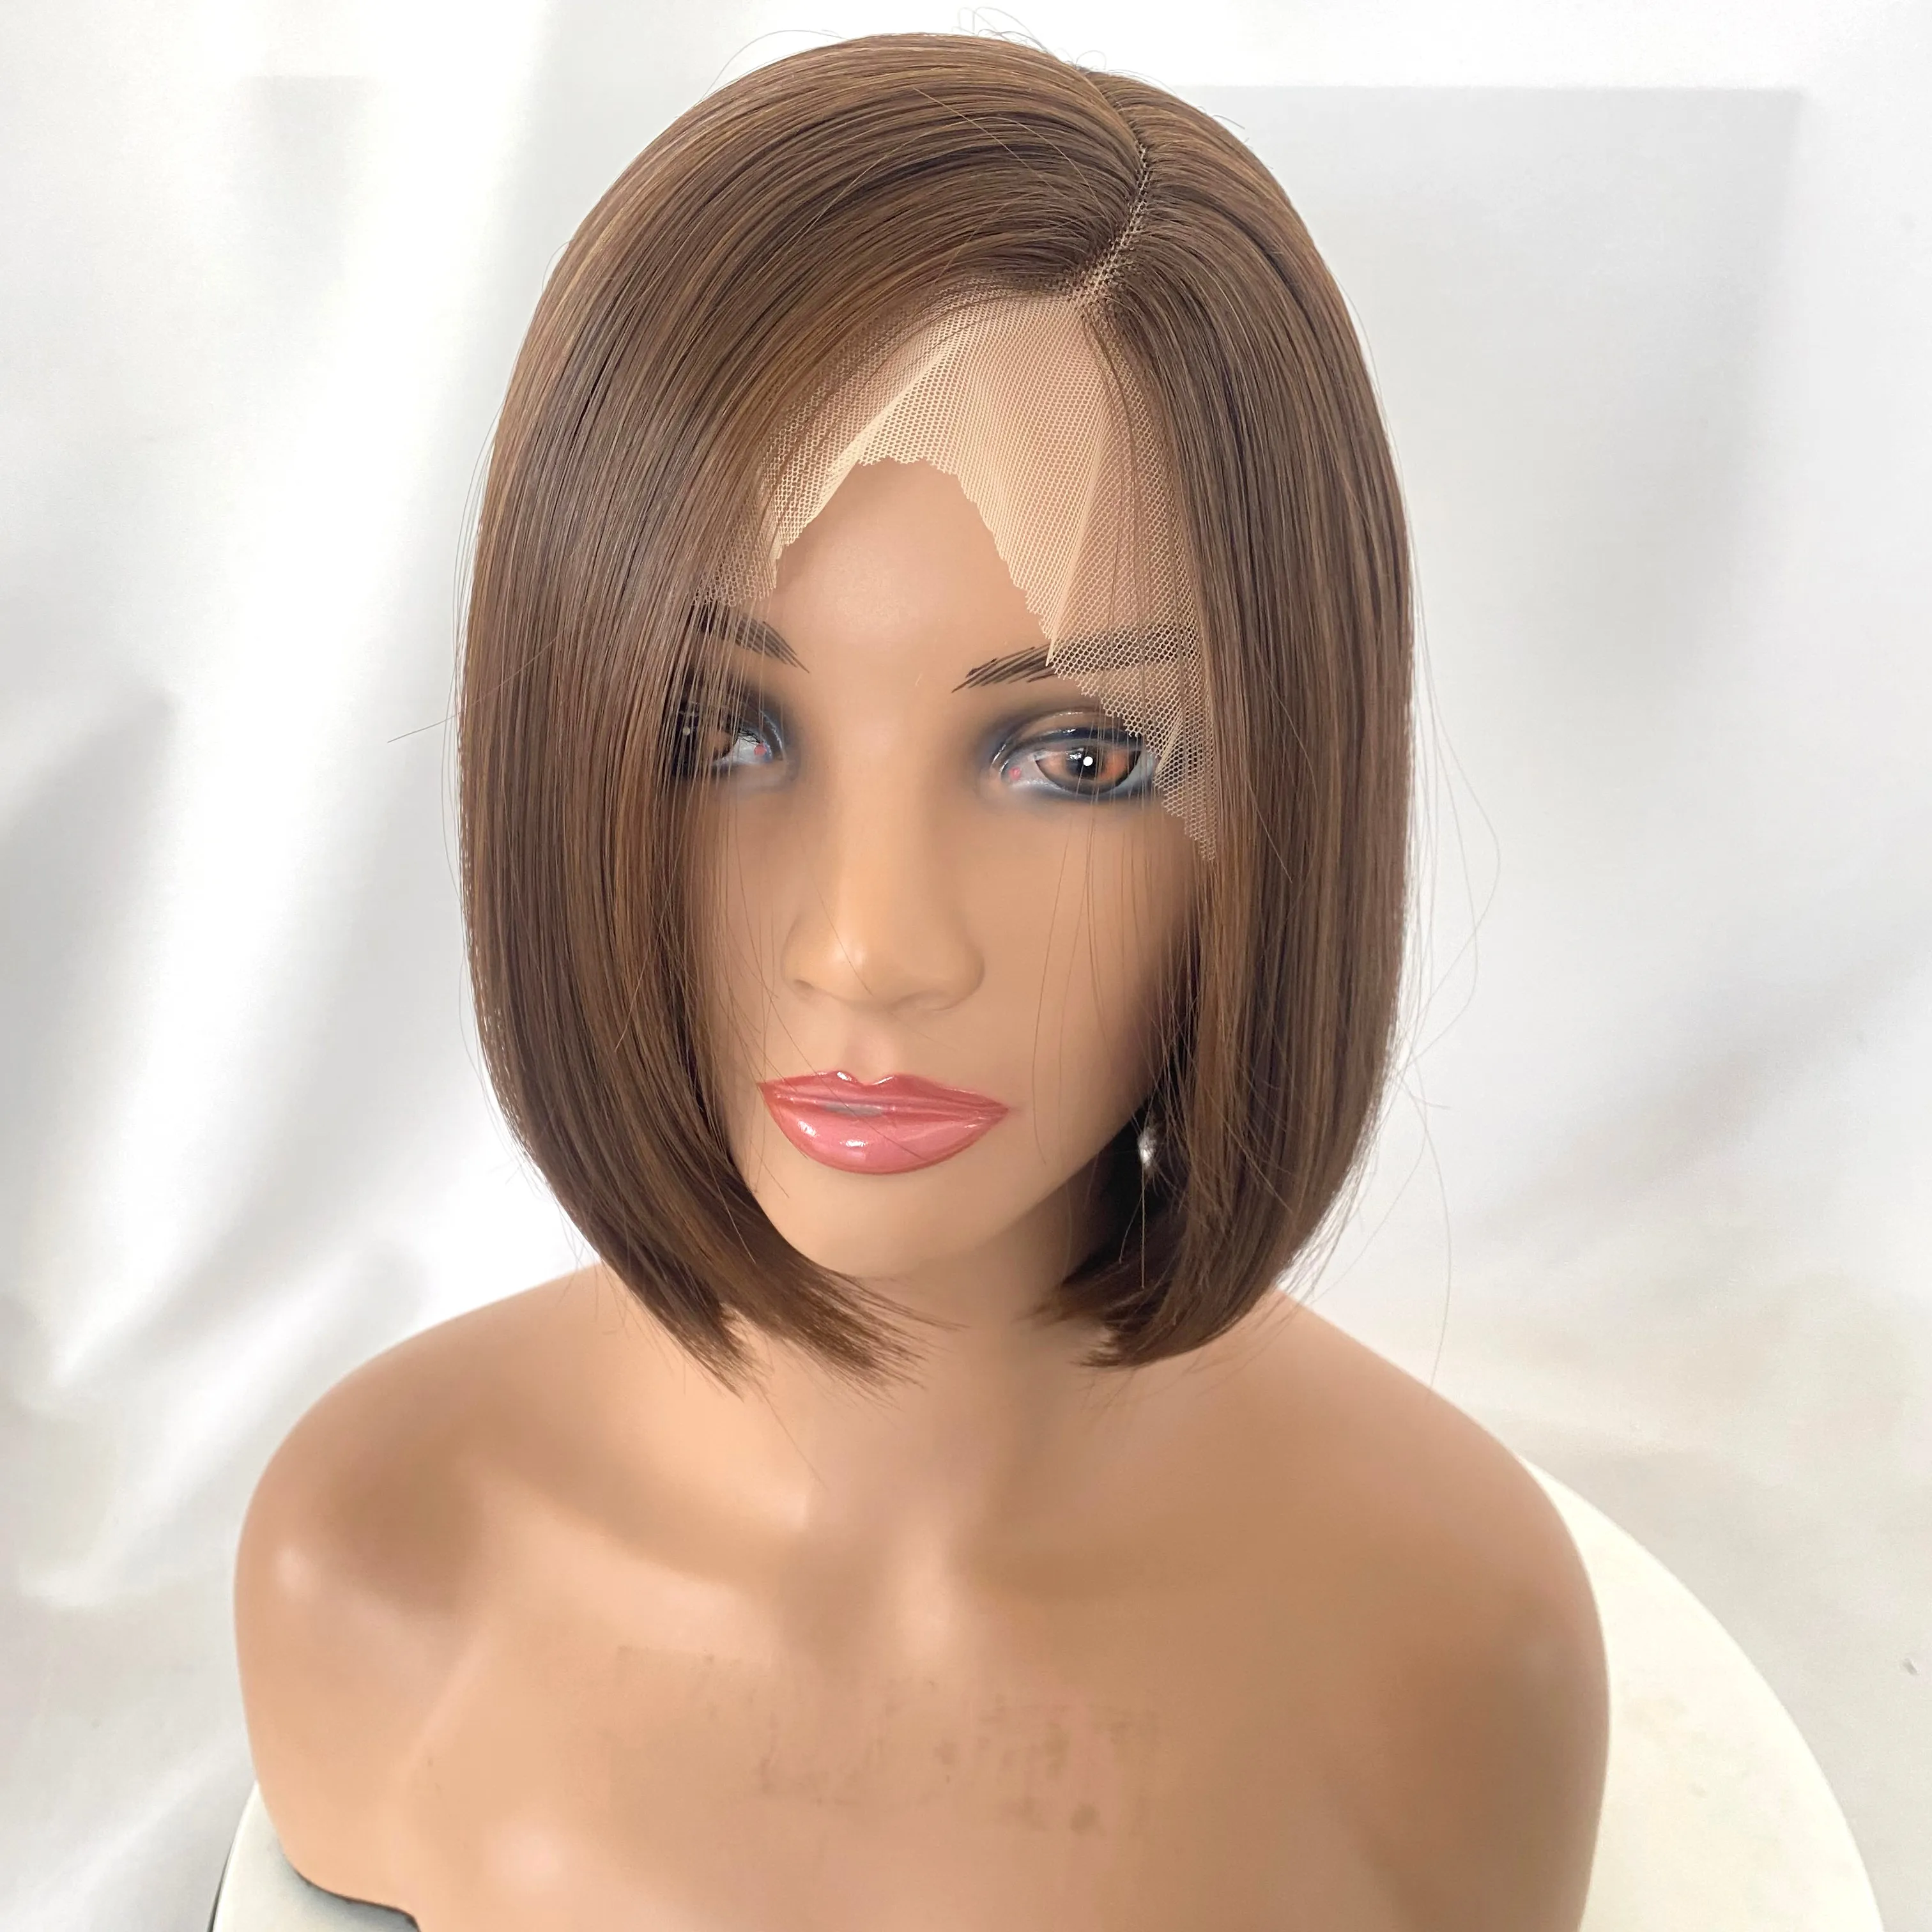 Billige synthetische Perücke hitze beständige transparente Spitze kurze Farben Bob Cut Lace Front Haar Perücken